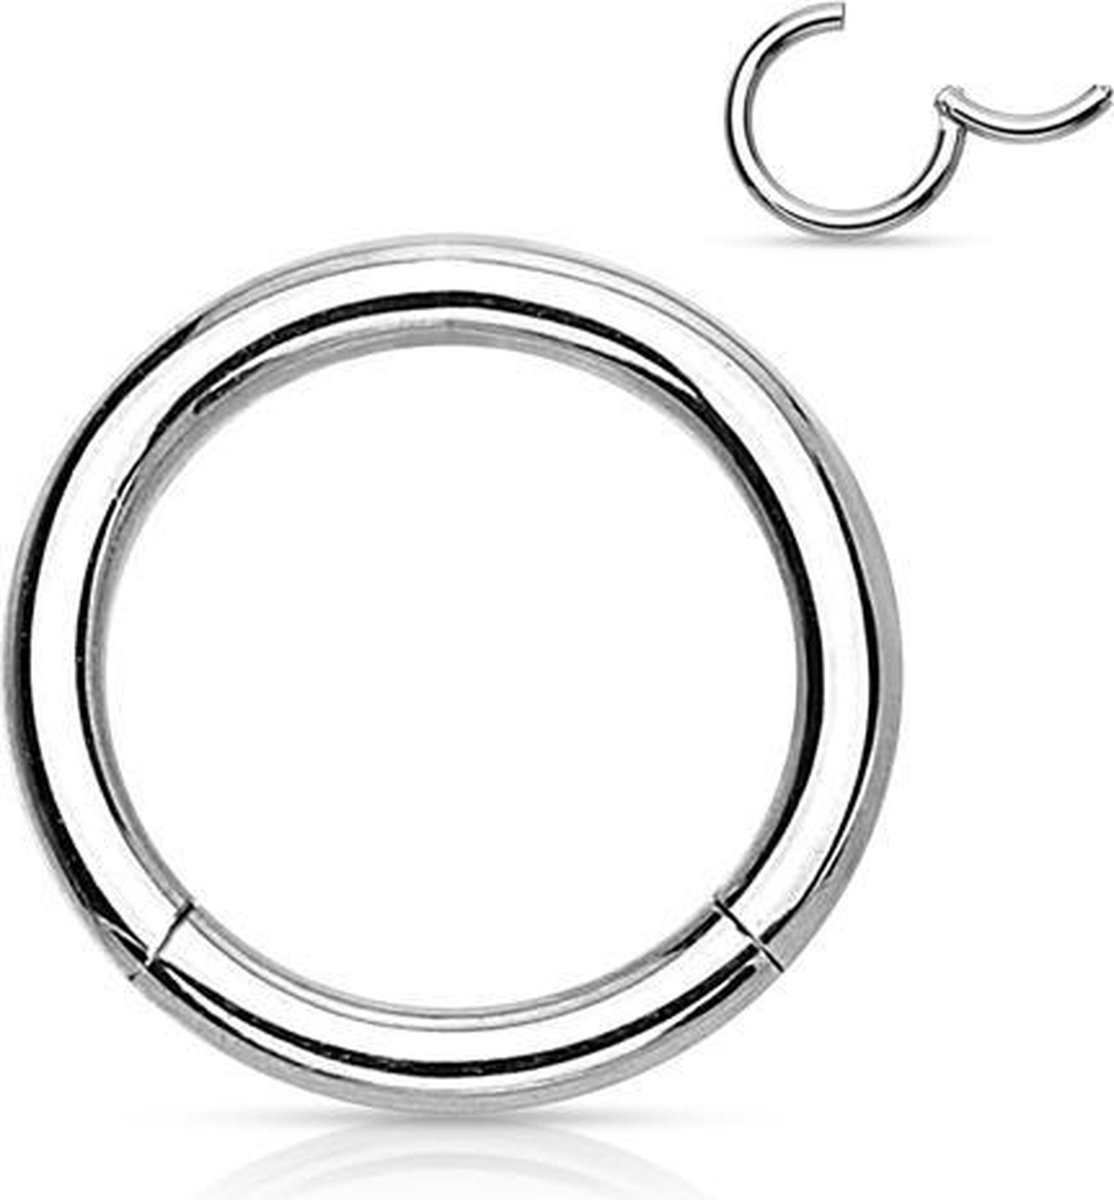 Helix piercing ring high quality 12mm - LMPiercings NL